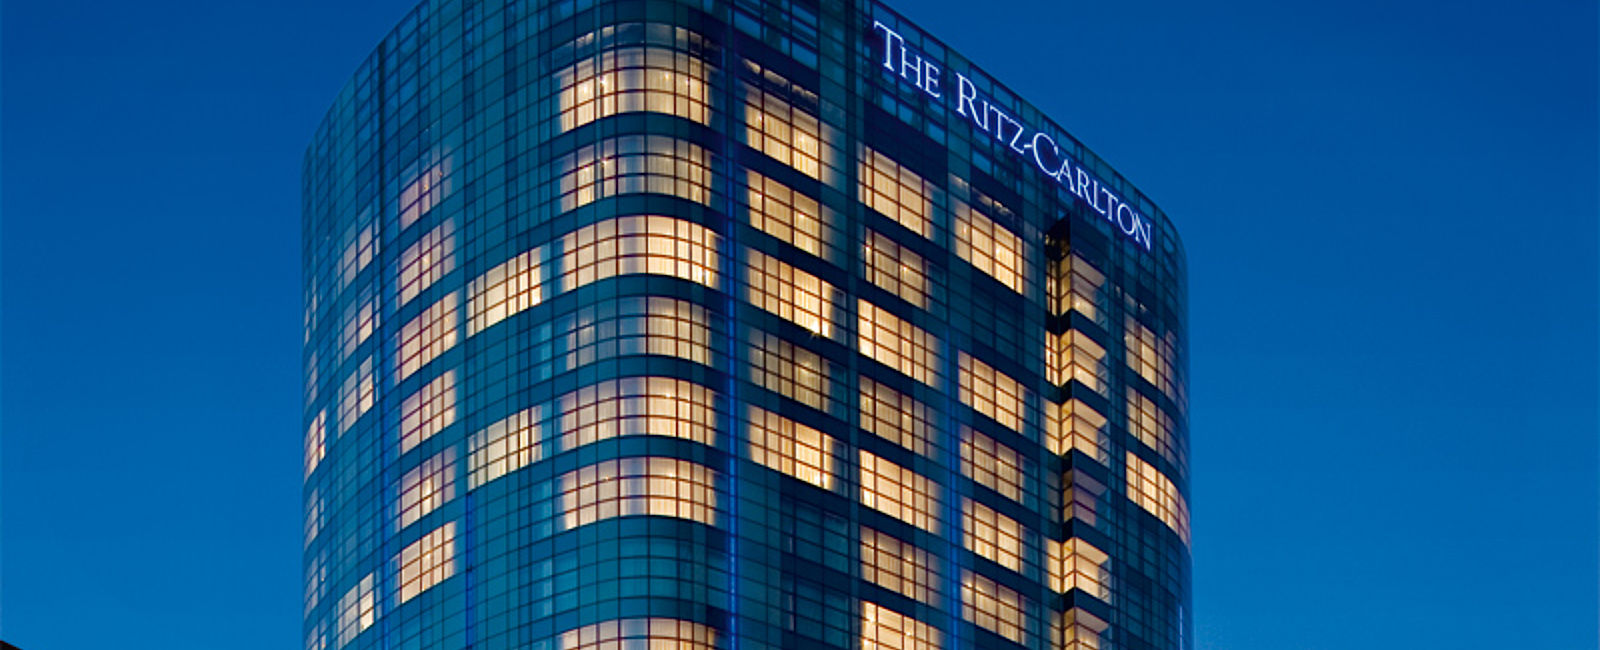 VERY SPECIAL HOTEL
 The Ritz-Carlton Beijing, Financial Street 
 Beijing mit Feng-Shui 